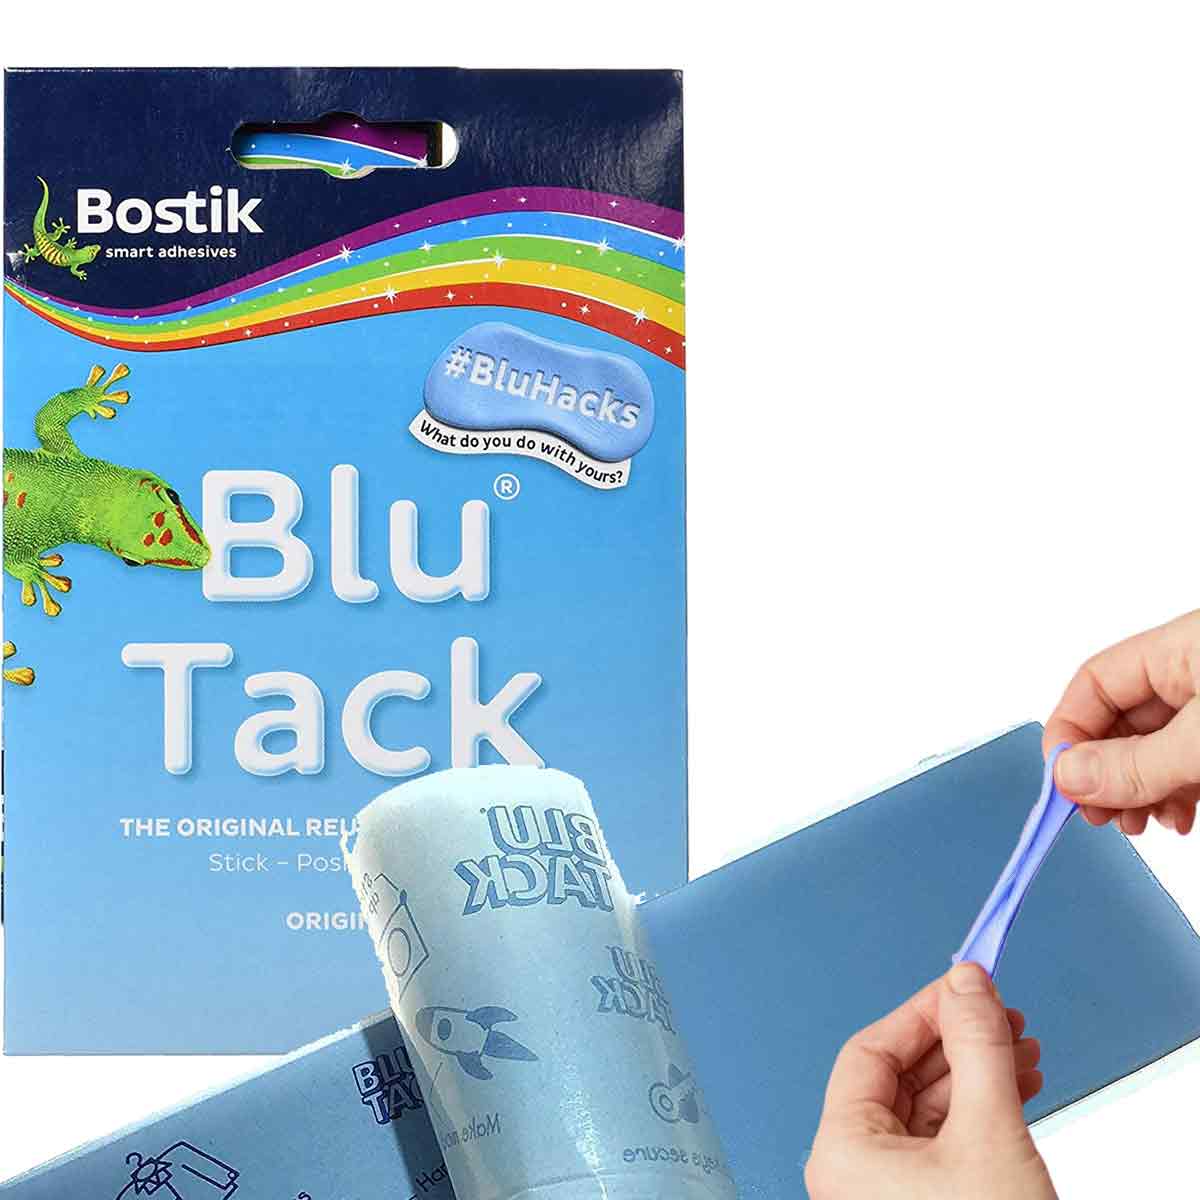 Bostik Sensory Blu-tack 50g - Sensory Needs Ltd